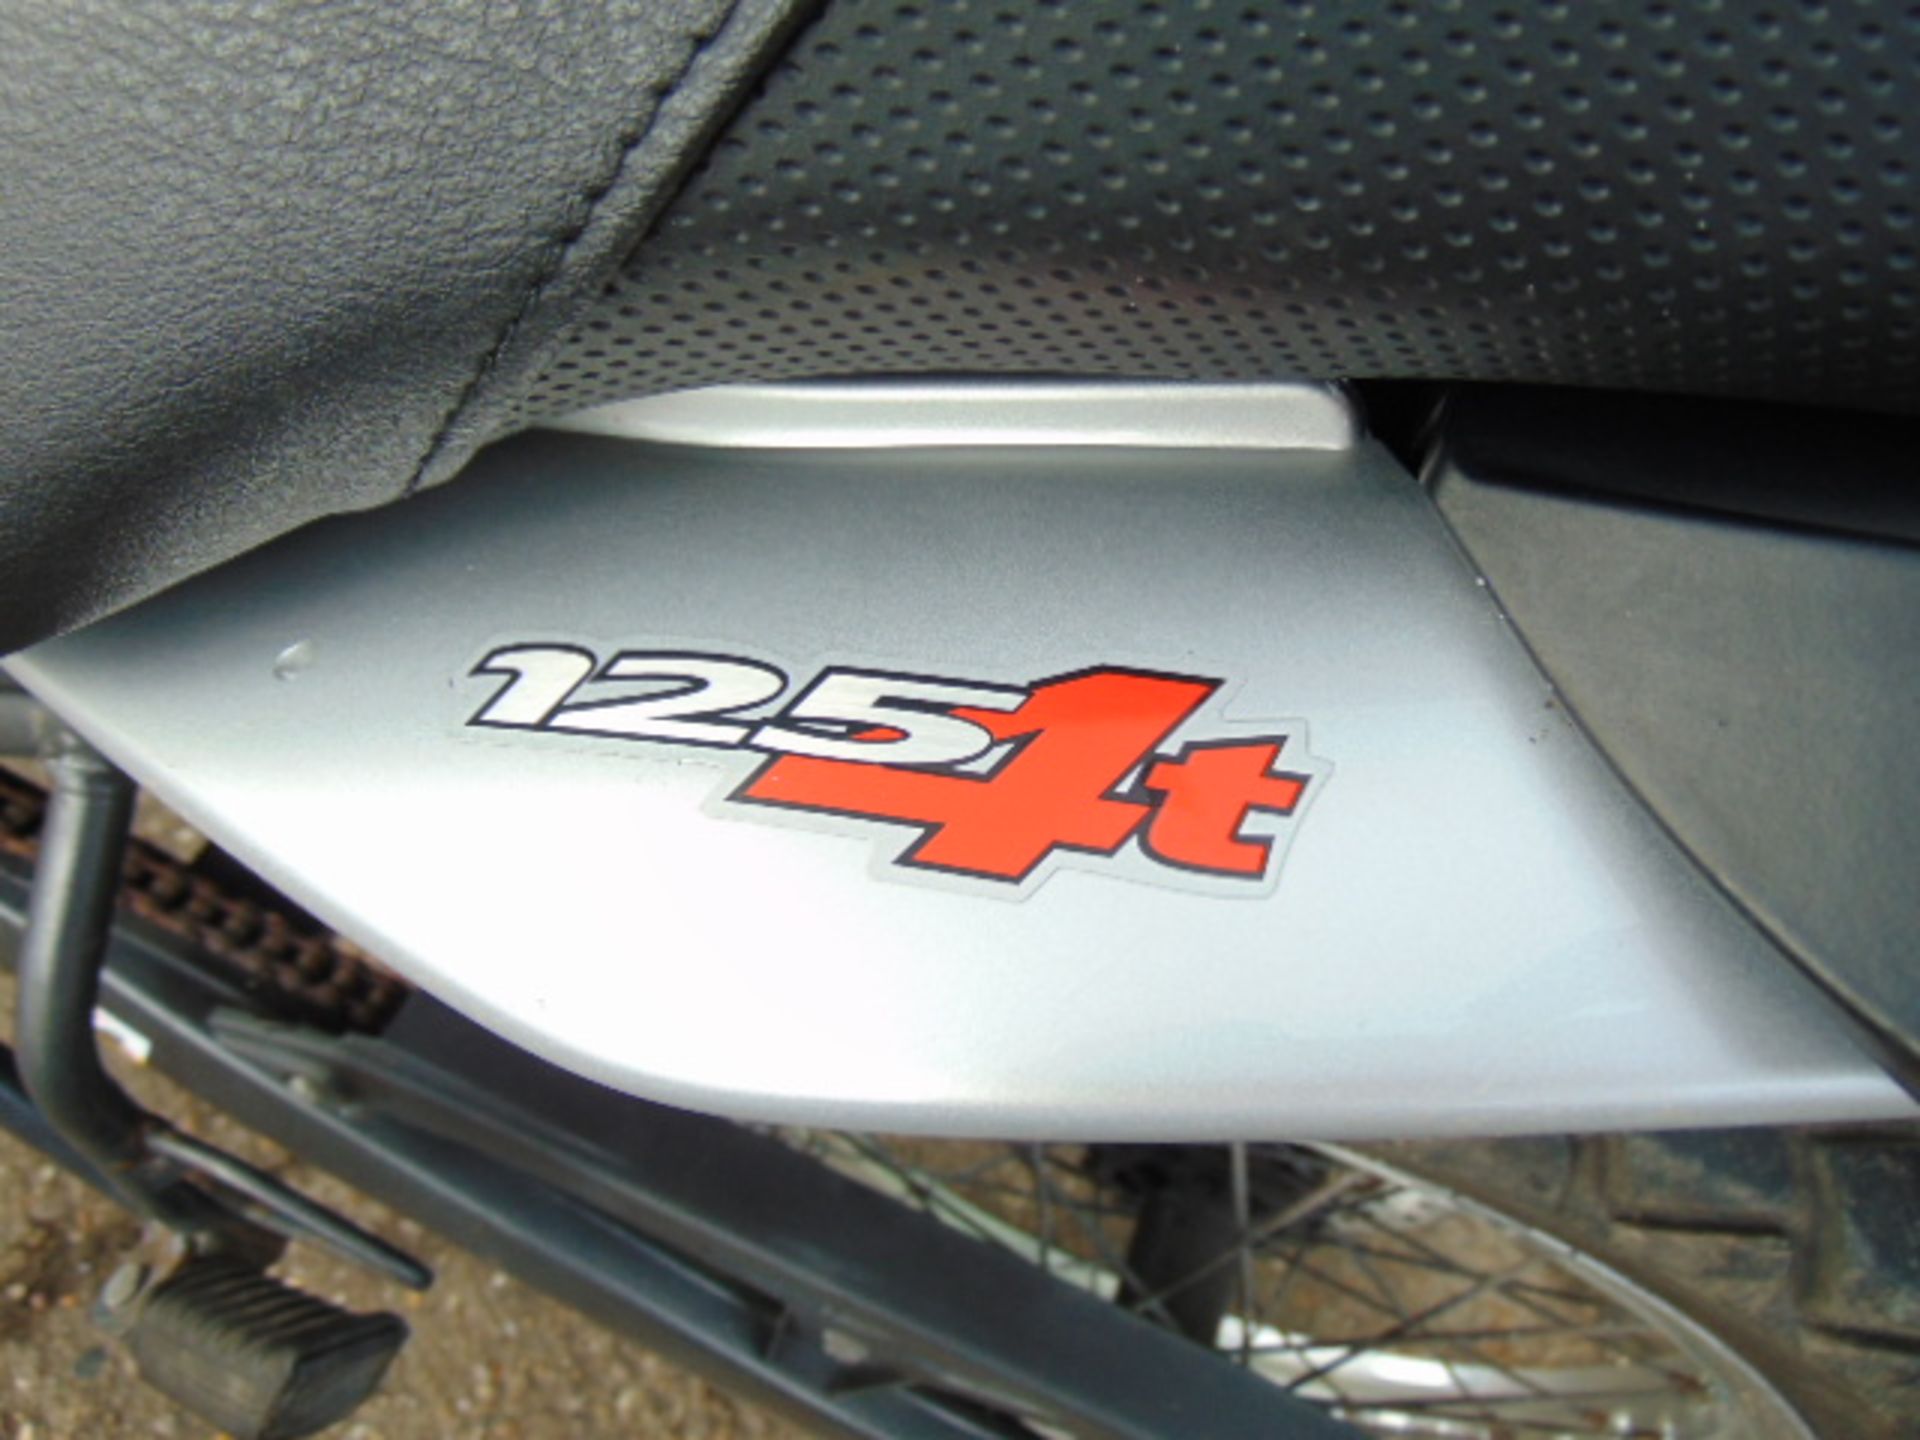 2016 Derbi Terra 125cc Motorbike 1933 miles - Image 13 of 17